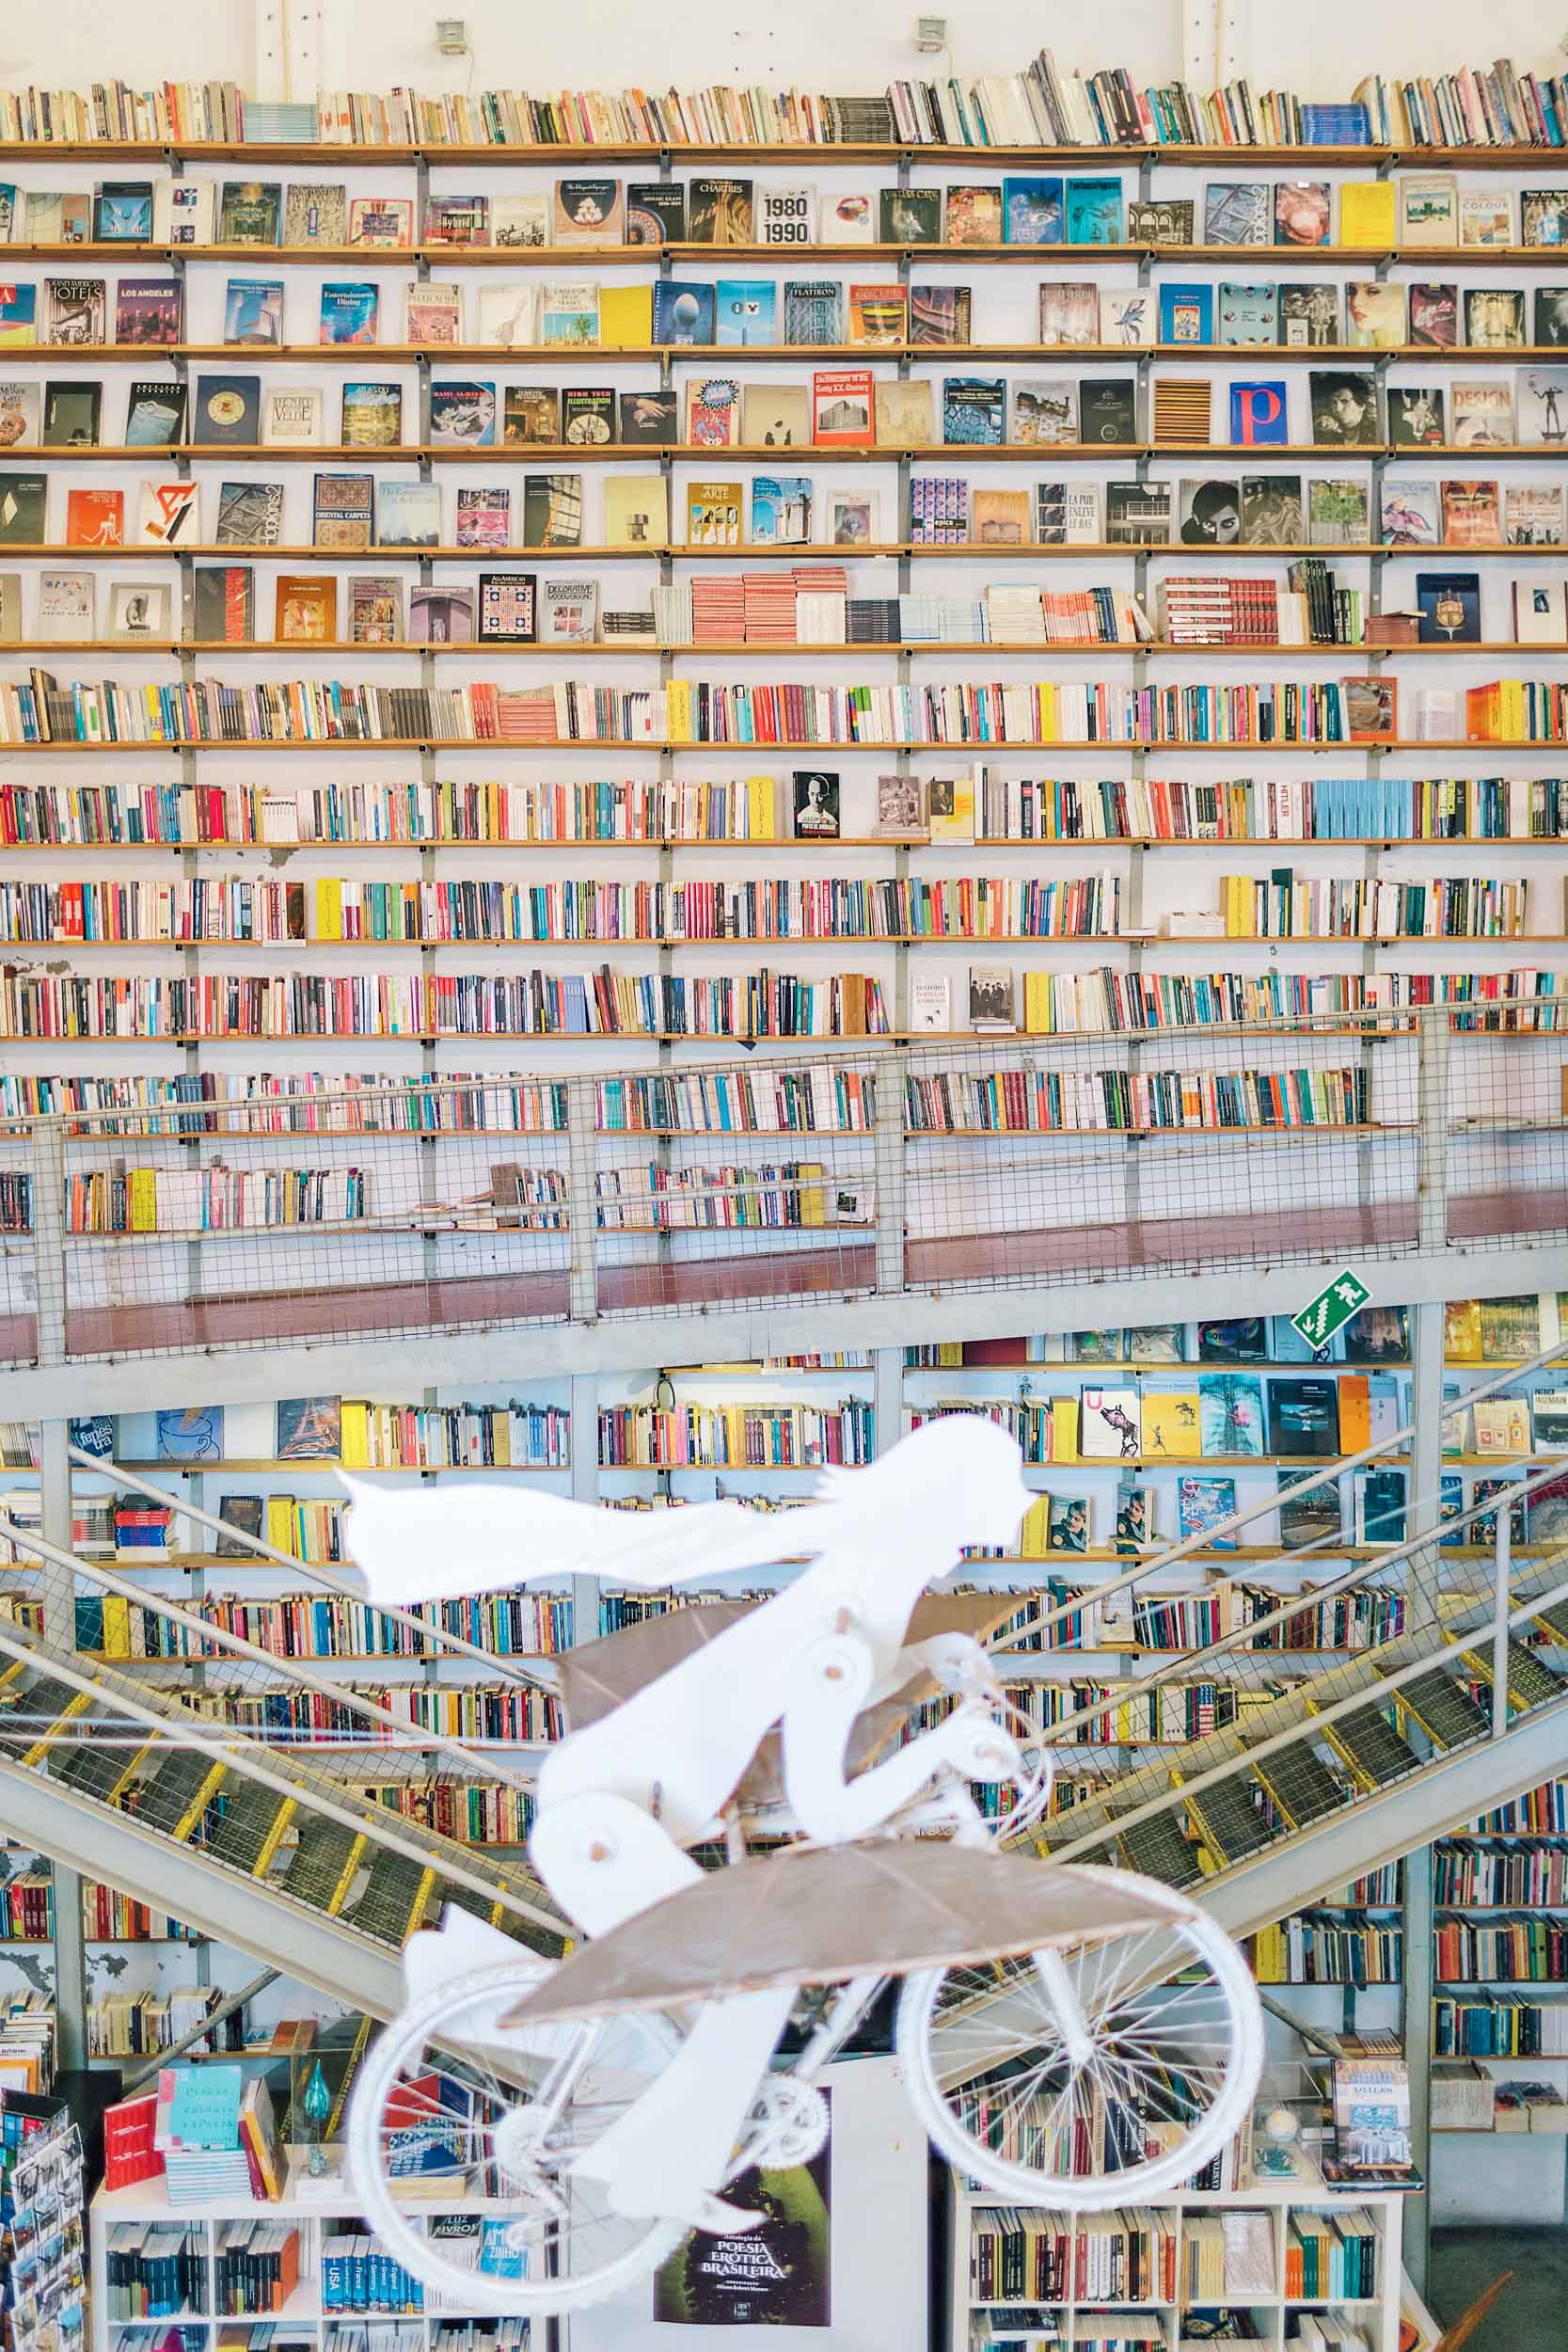 Ler Devagar, an adorable bookstore at LX Factory in Lisbon